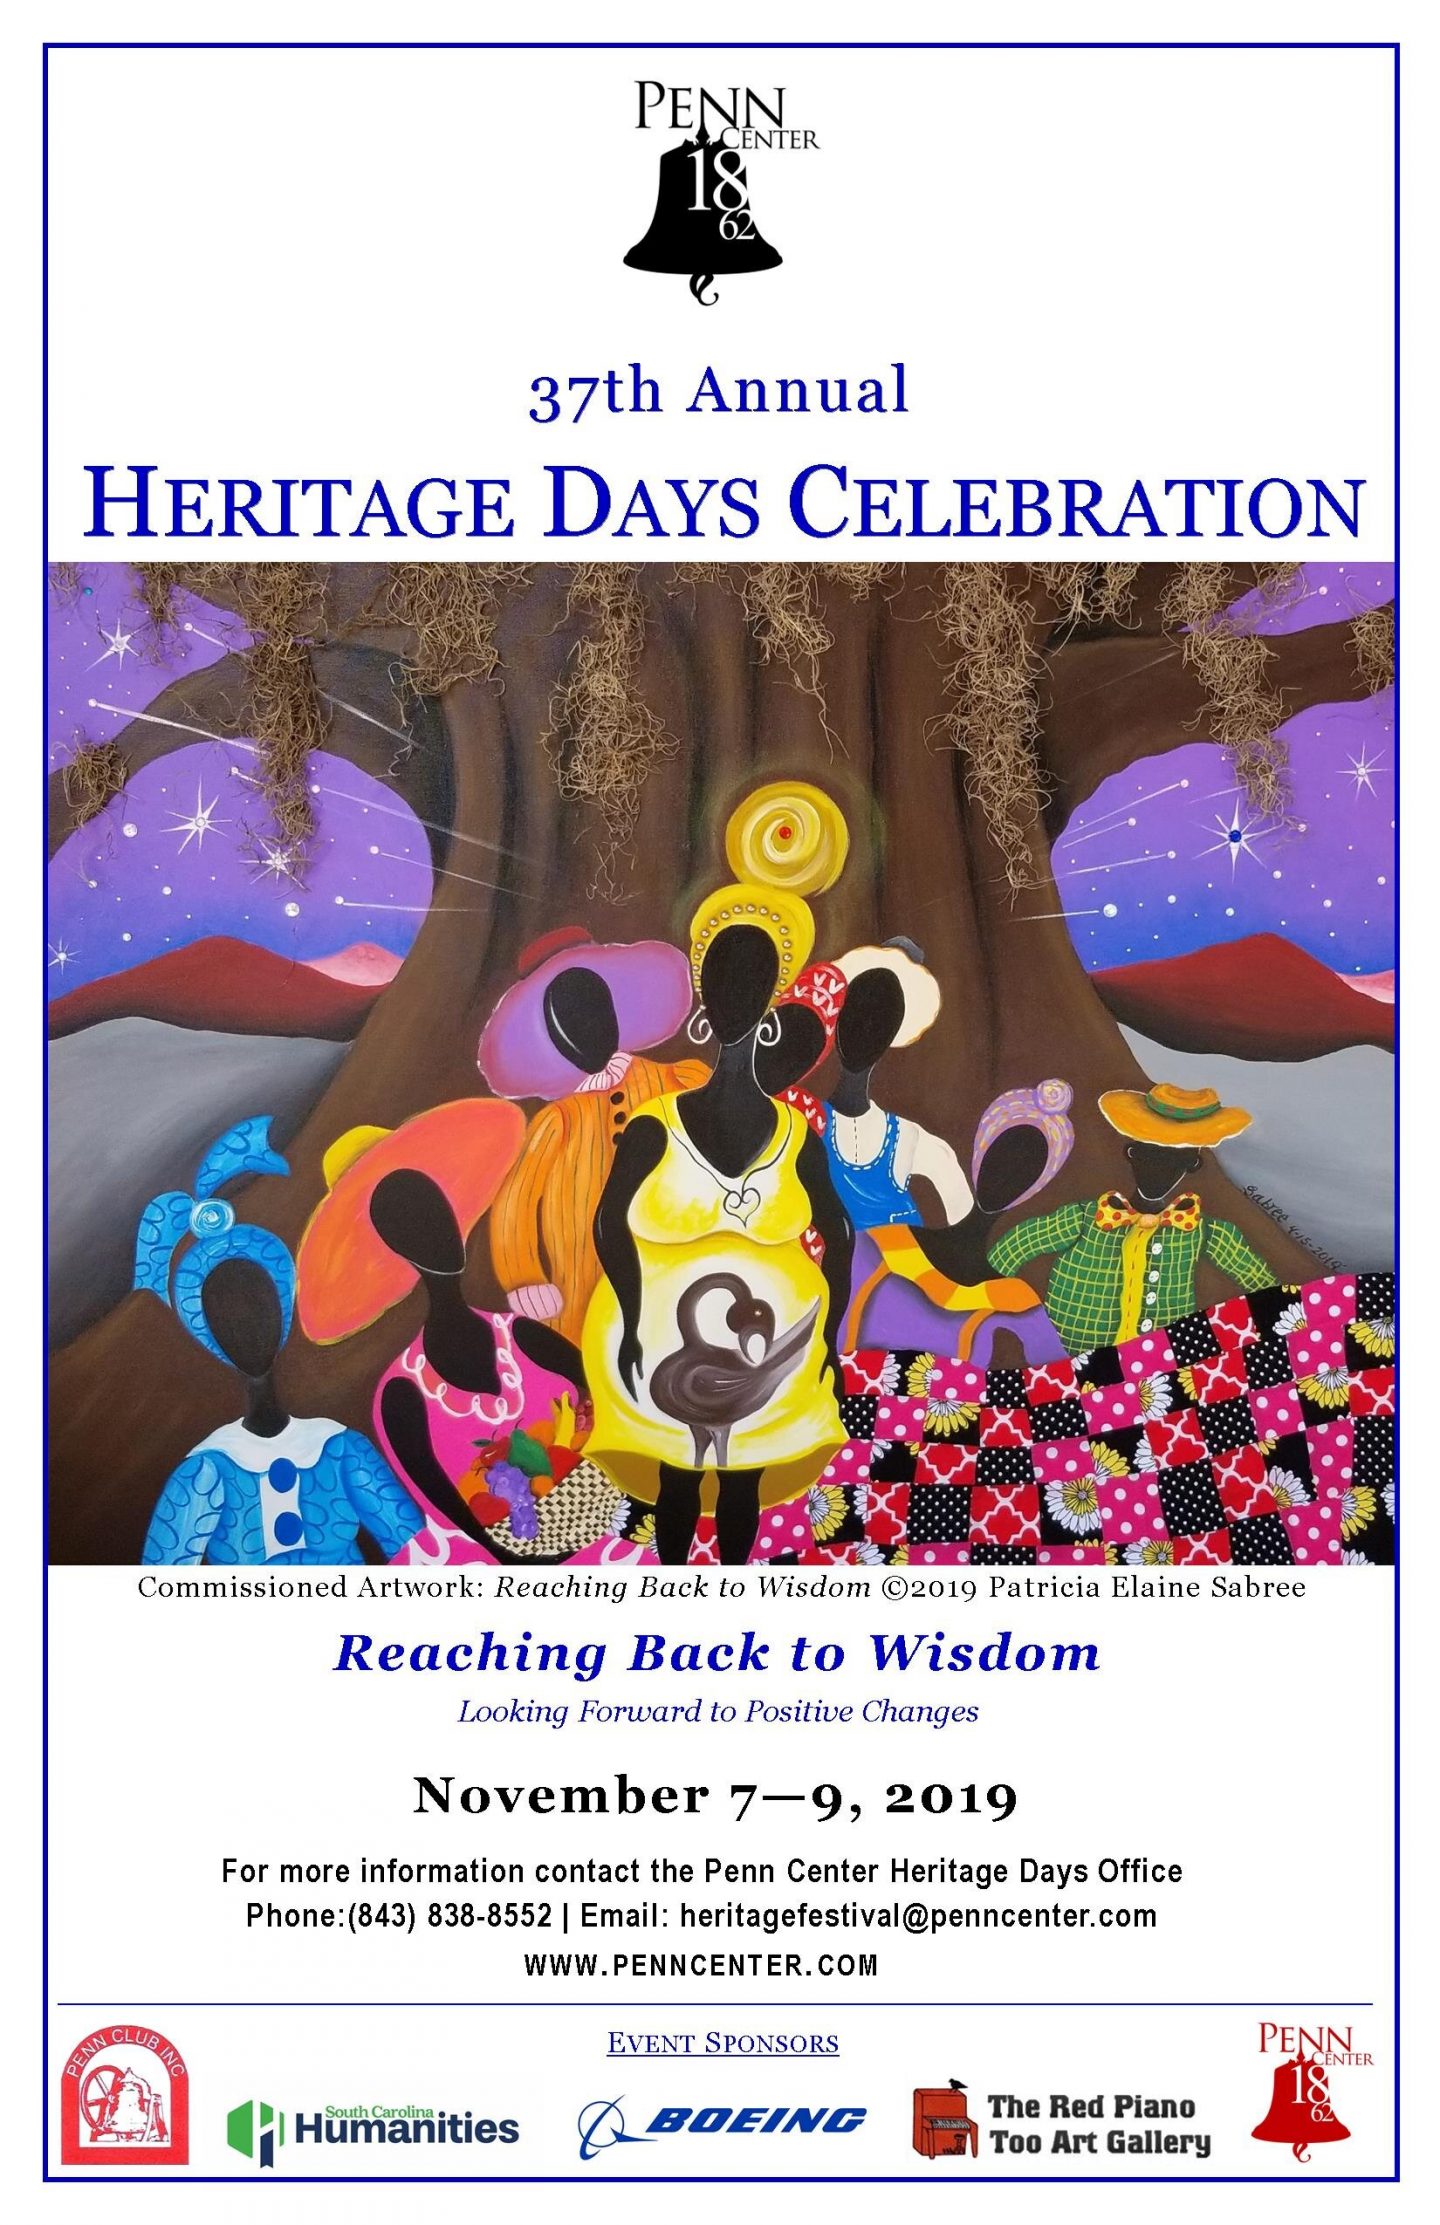 Heritage Travel 37th Annual Penn Center Heritage Days Celebration